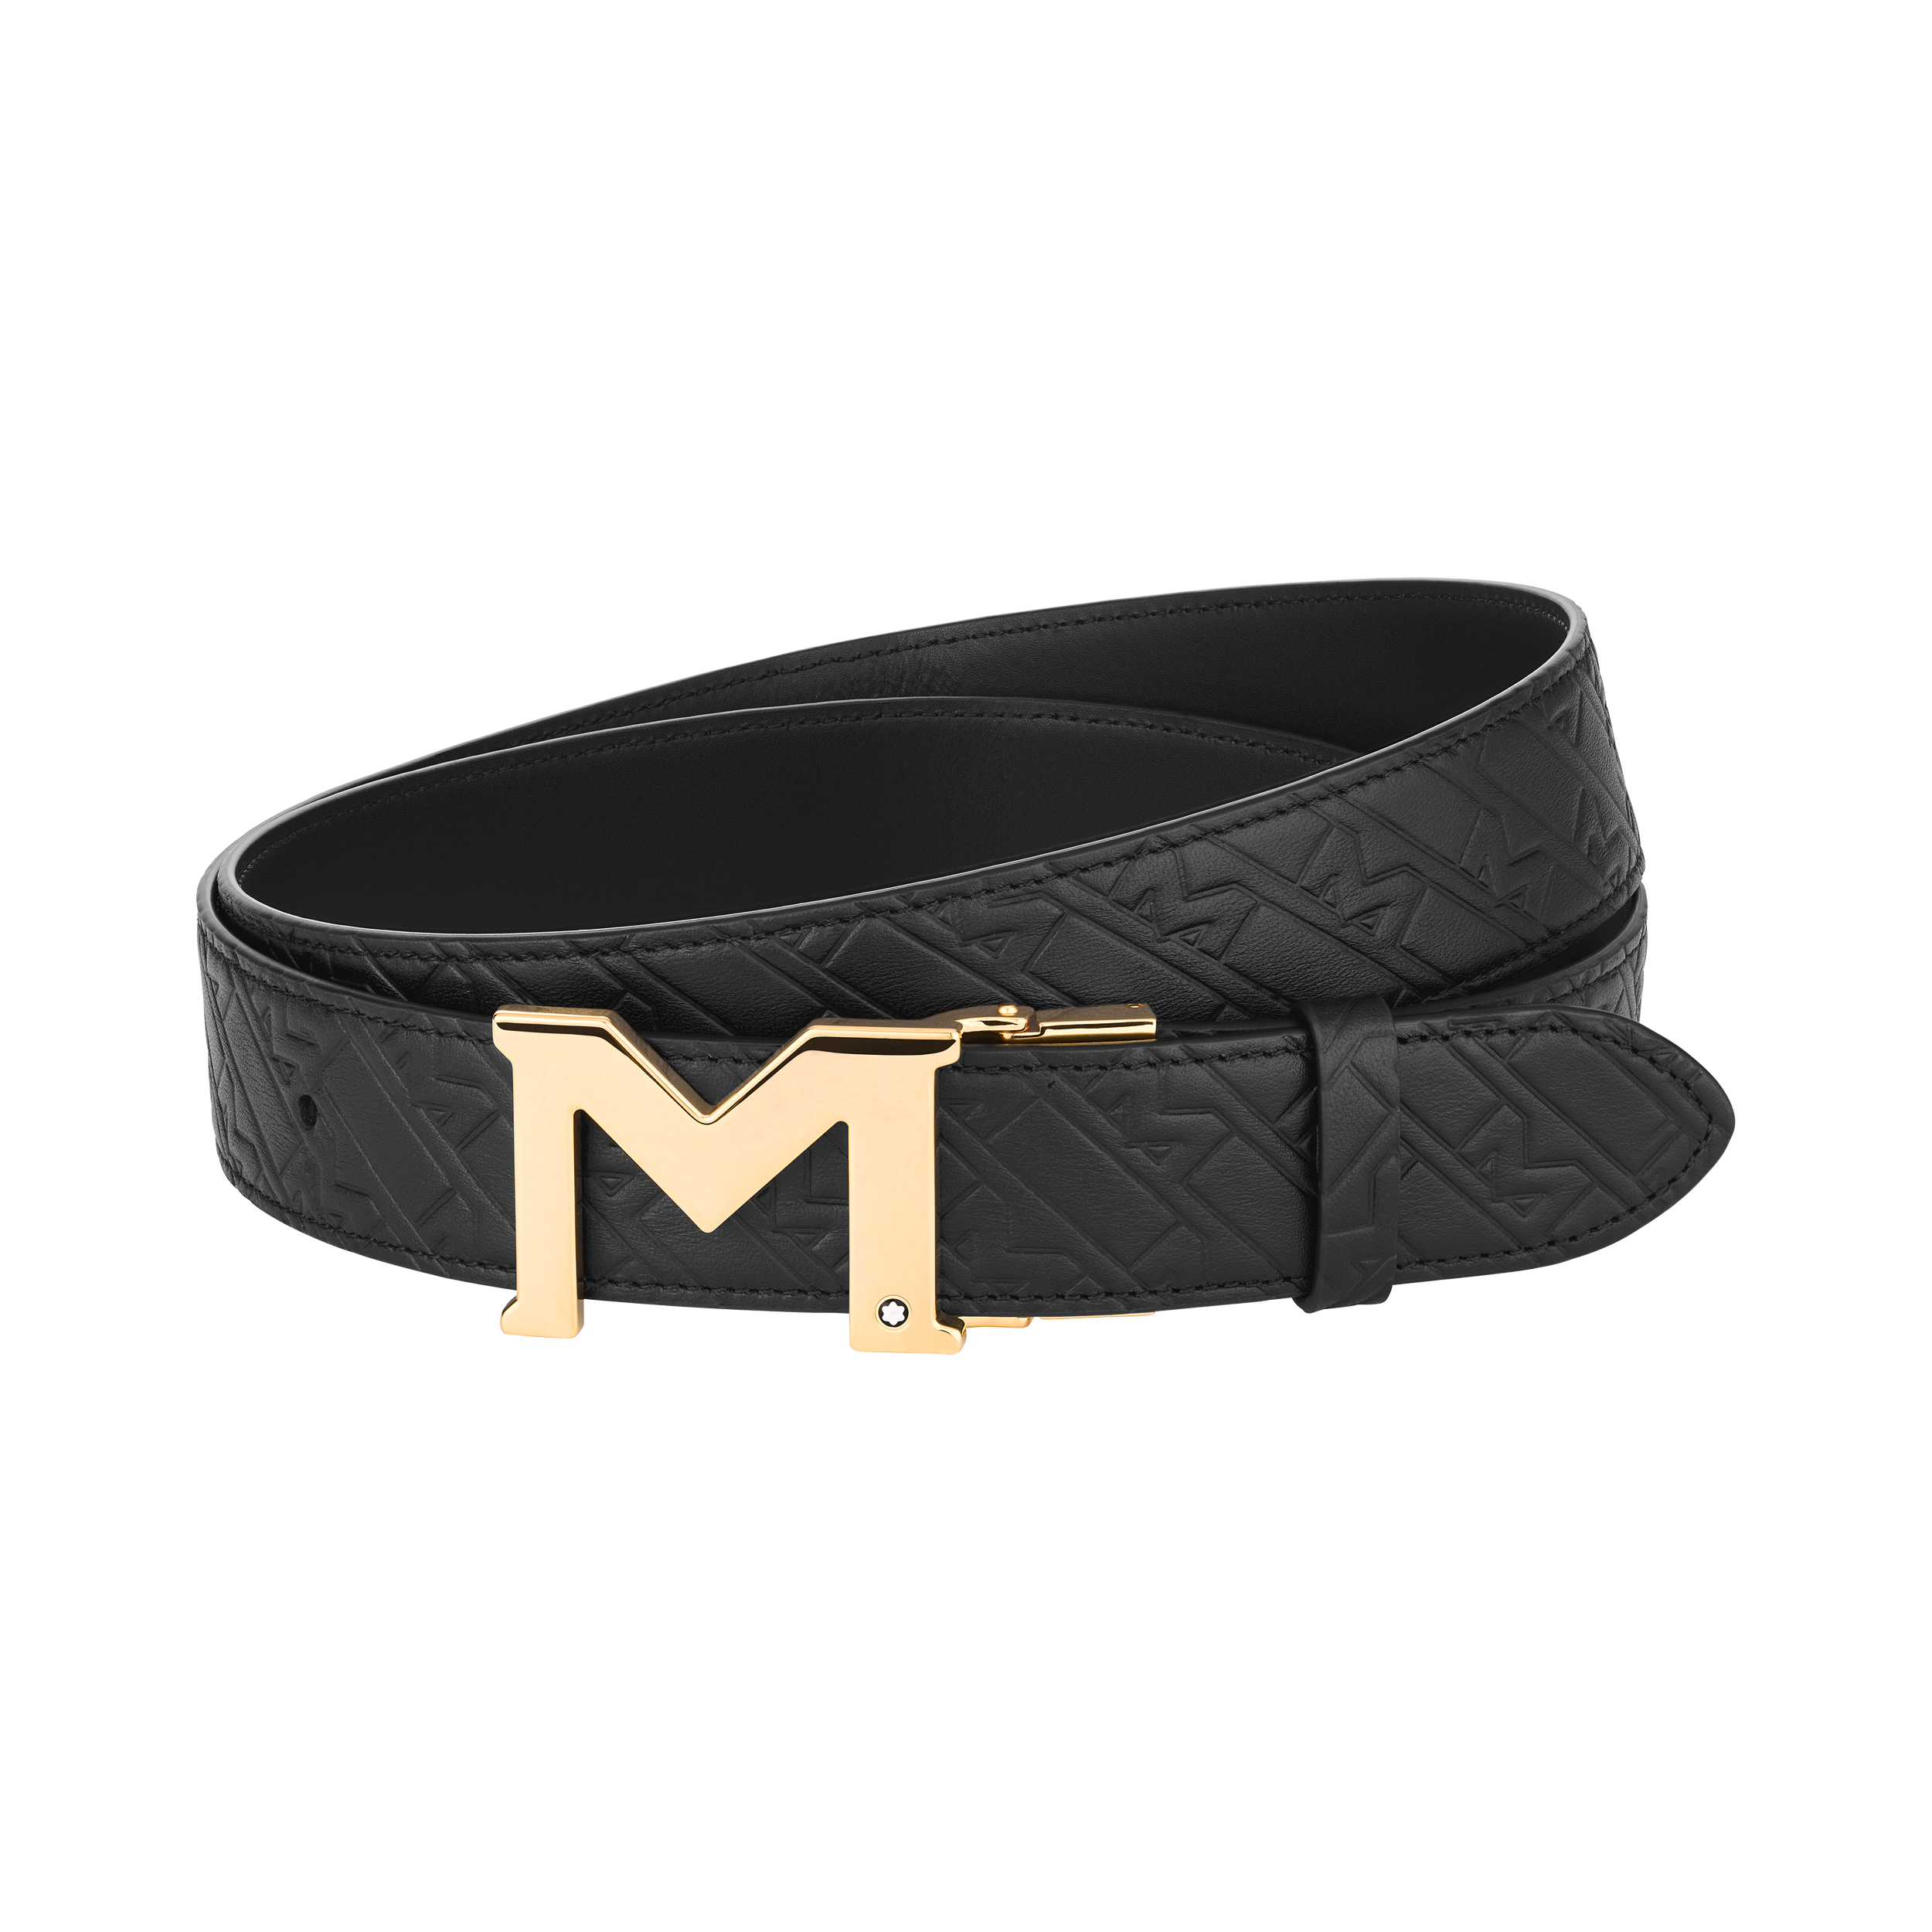 M buckle black 35 mm reversible leather belt, image 1